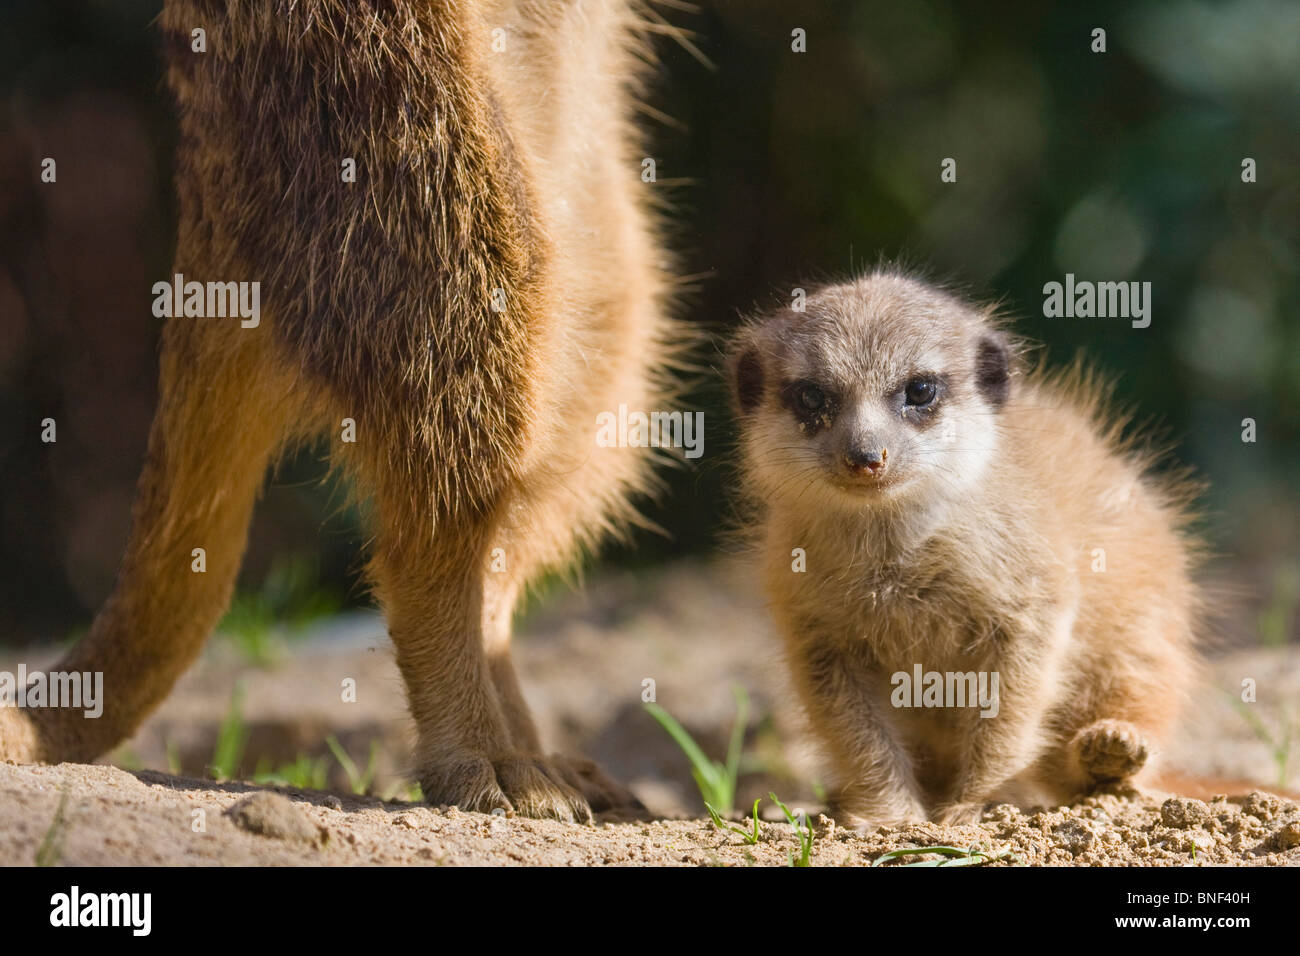 suricate, slender-tailed meerkat (Suricata suricatta), infant sitting on the ground beside a securing adult Stock Photo